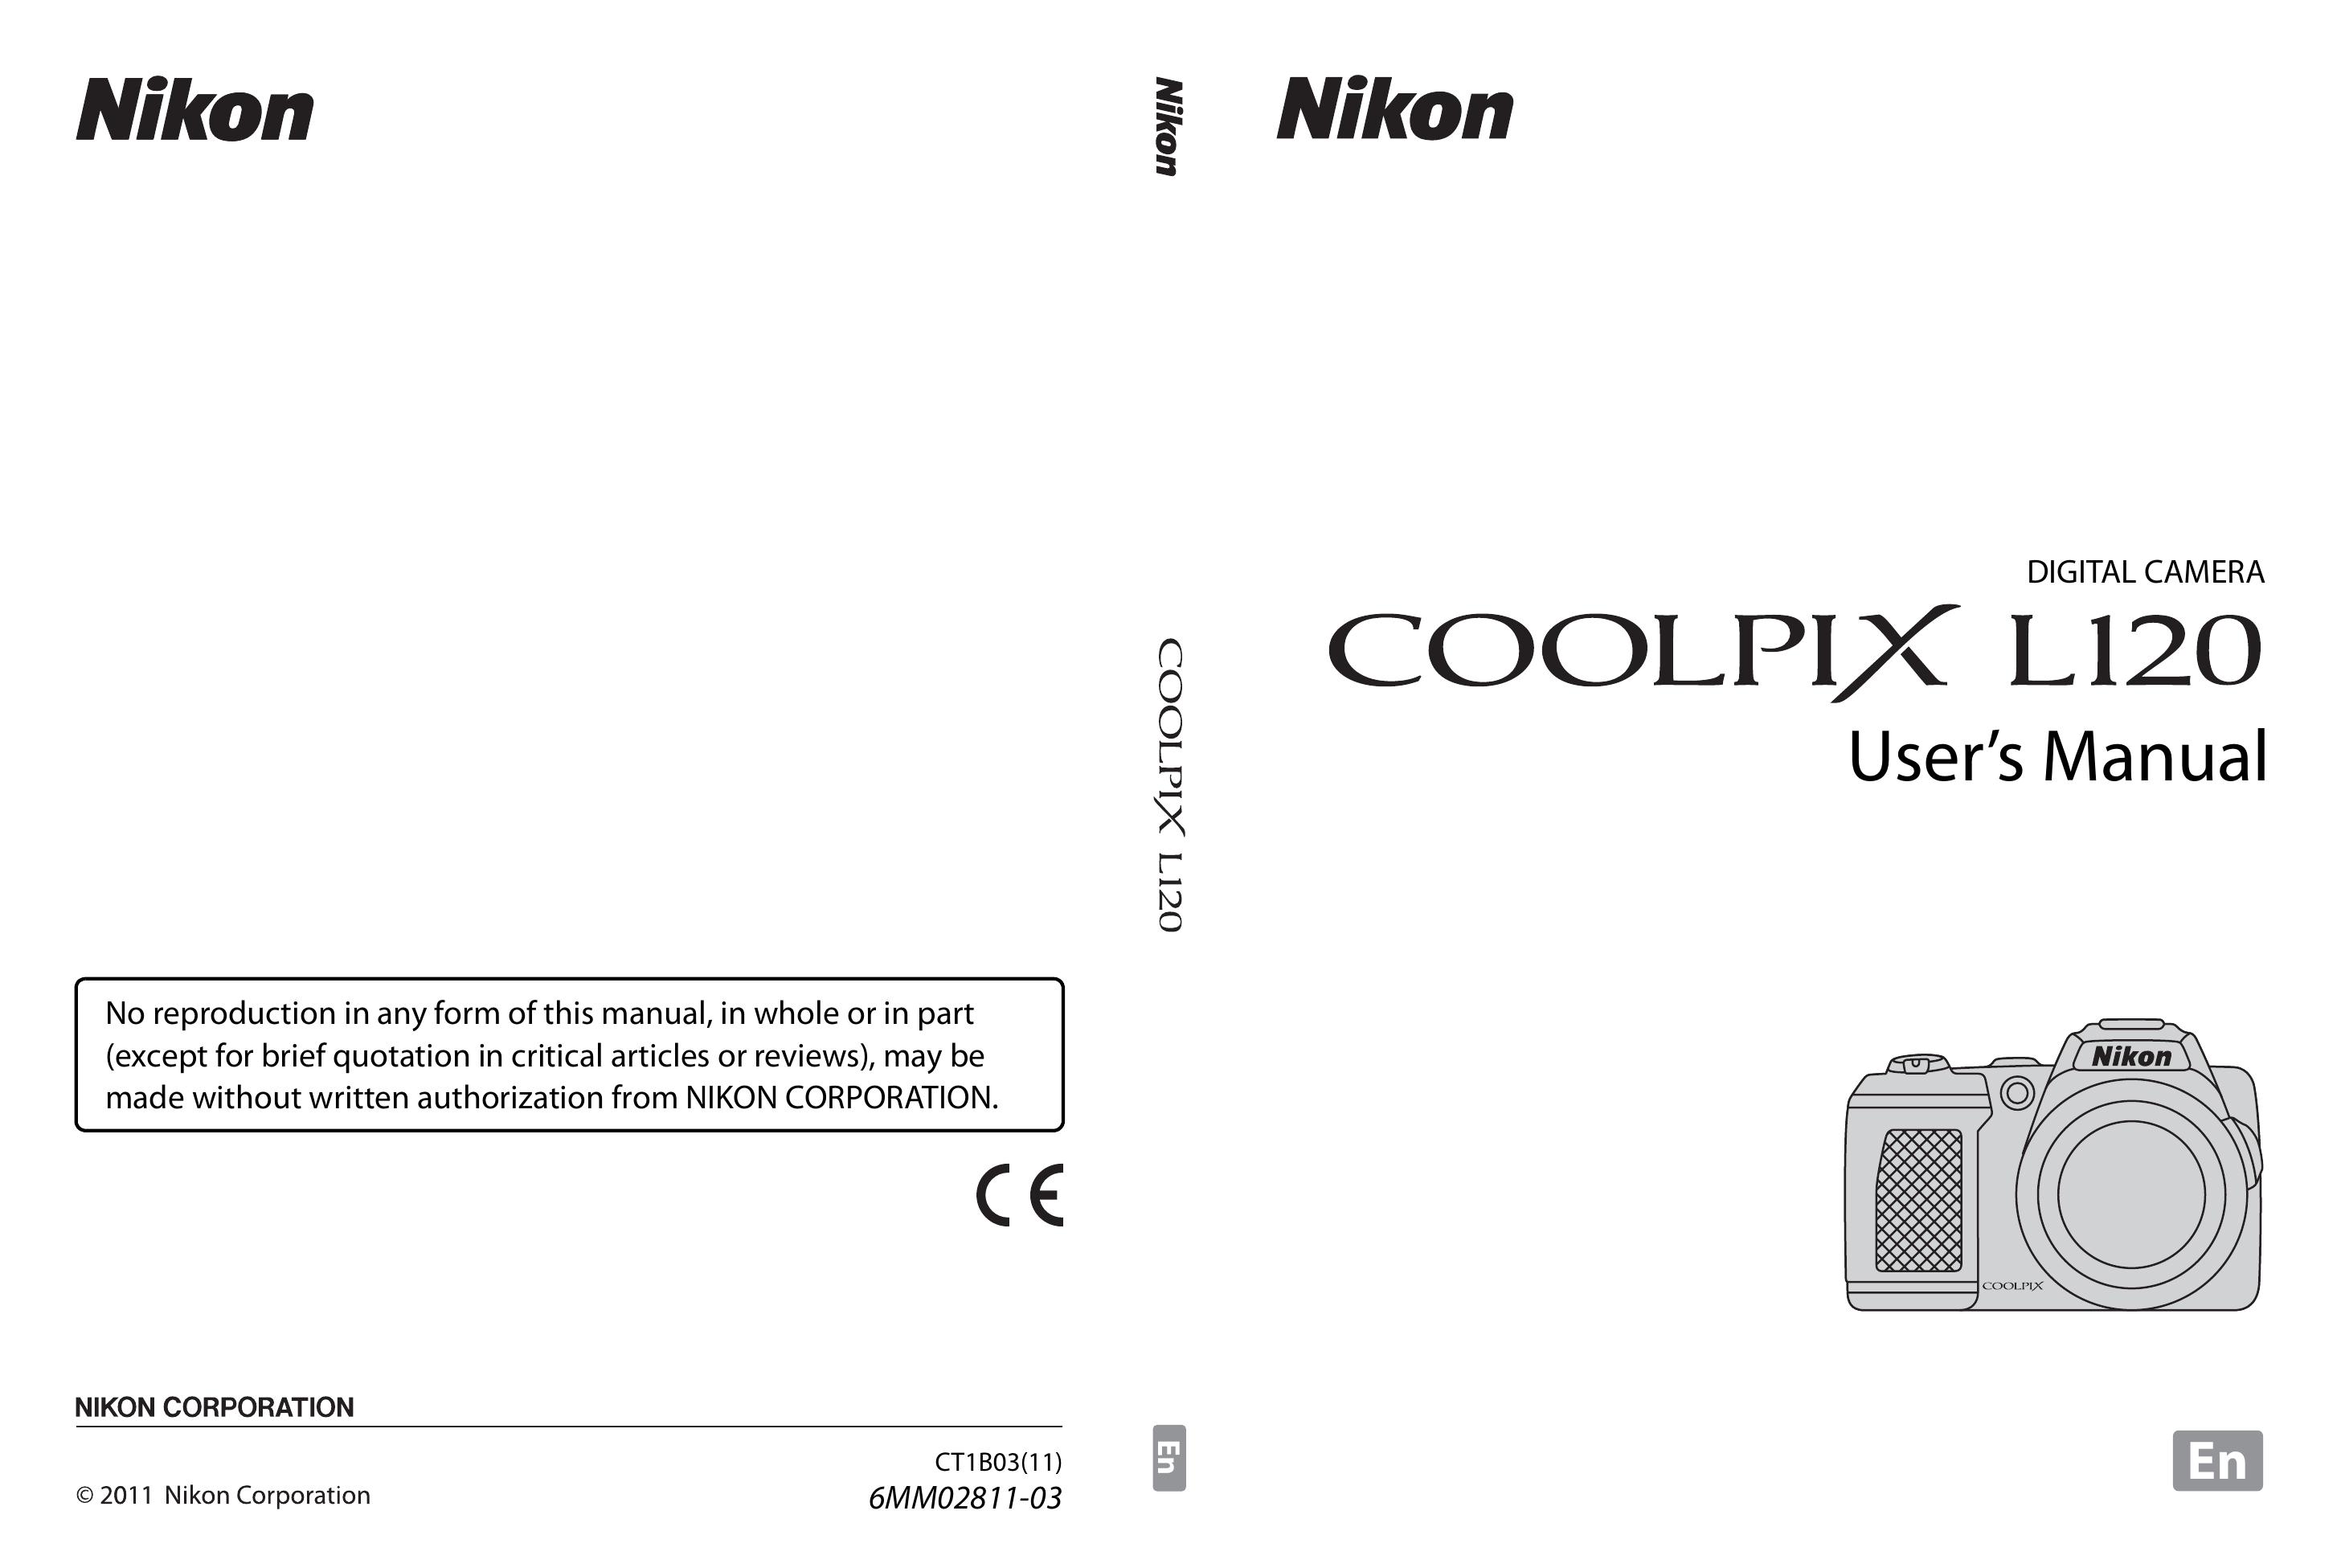 Nikon COOLPIXL120BLK Camcorder User Manual